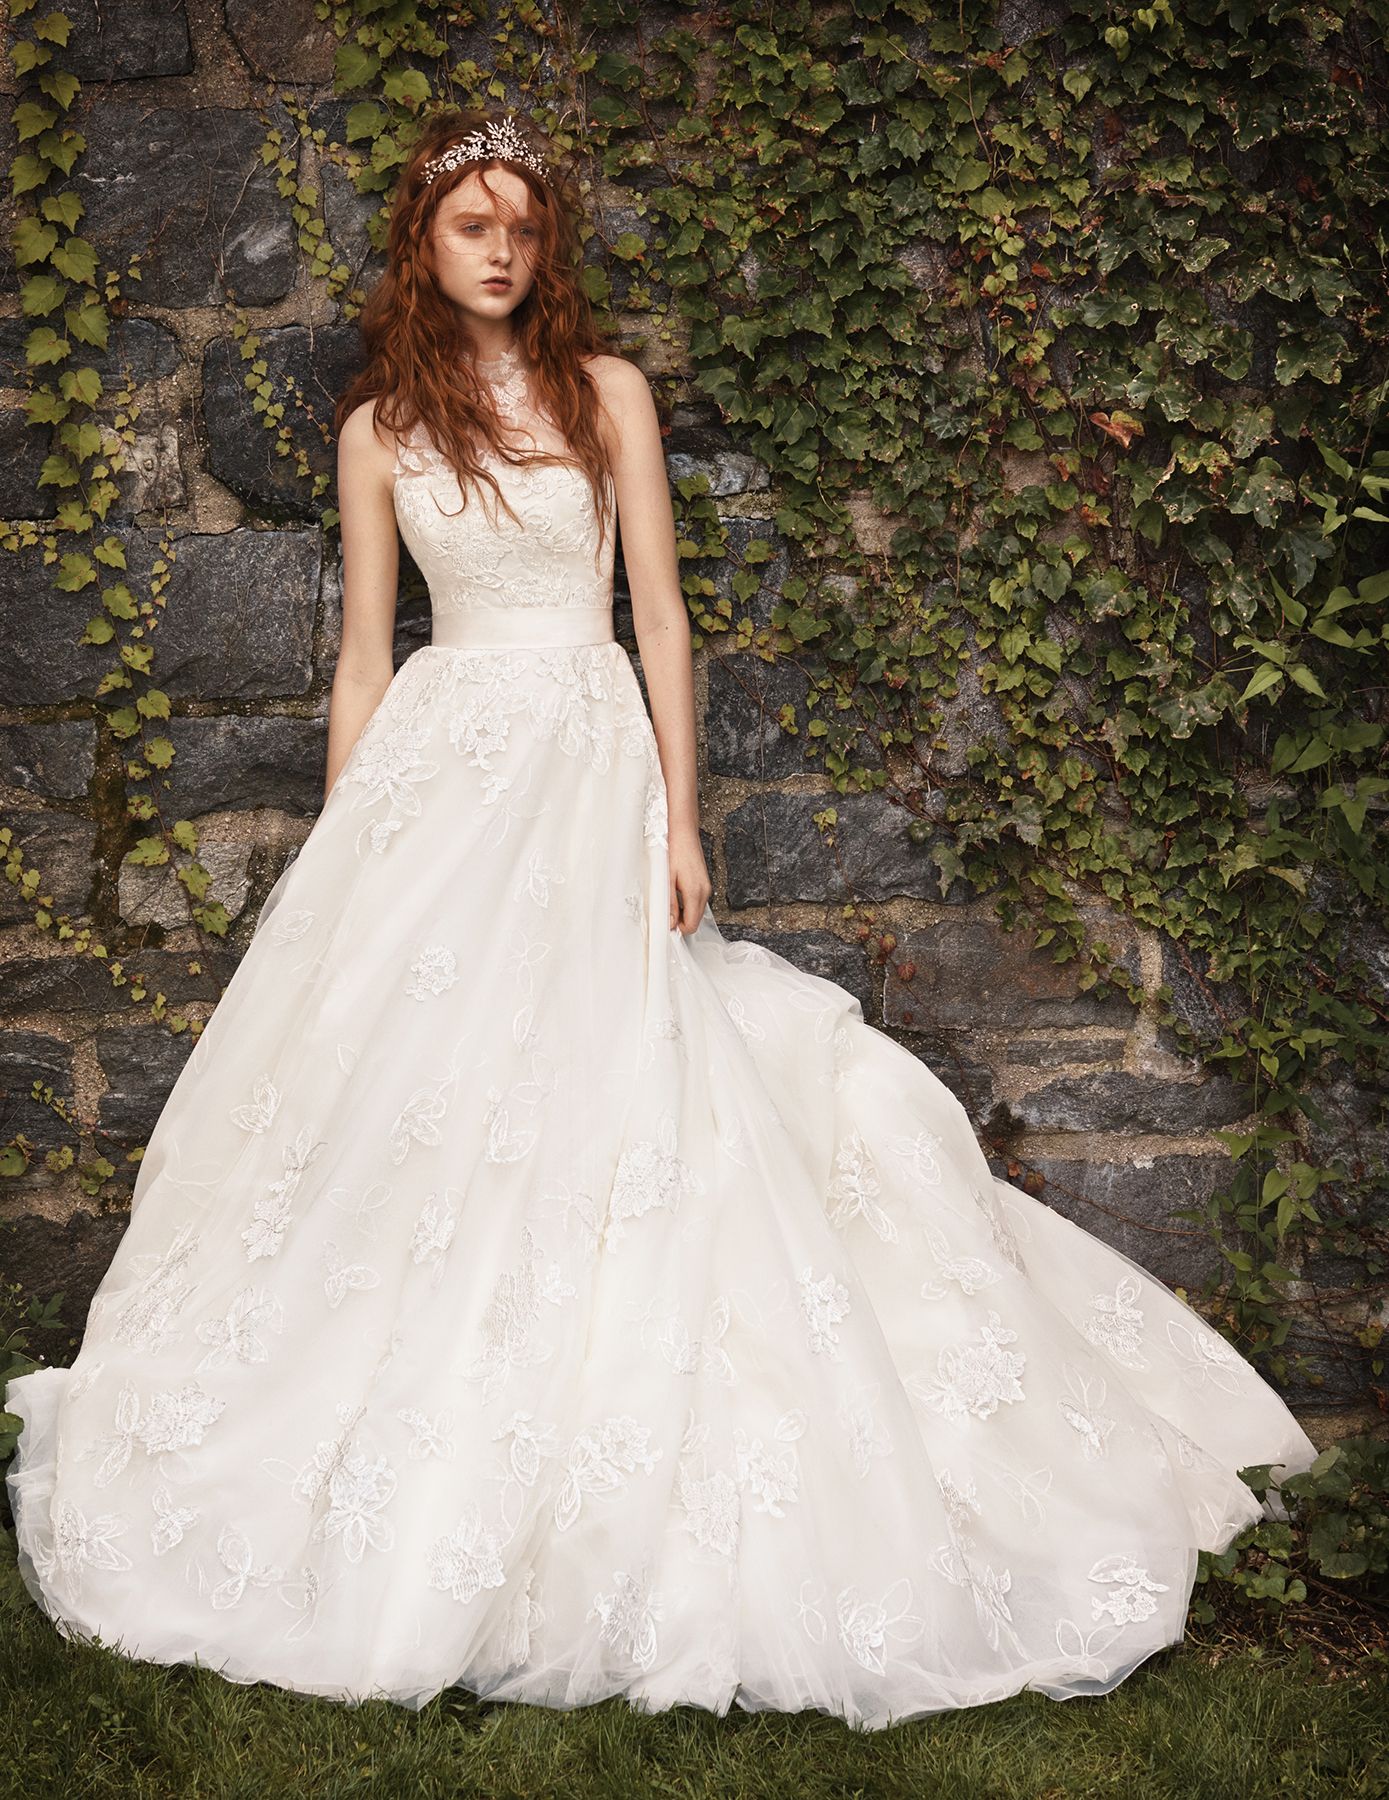 Spring 2018 WHITE by Vera Wang wedding dresses and bridesmaid dresses, exclusively at David's Bridal. 